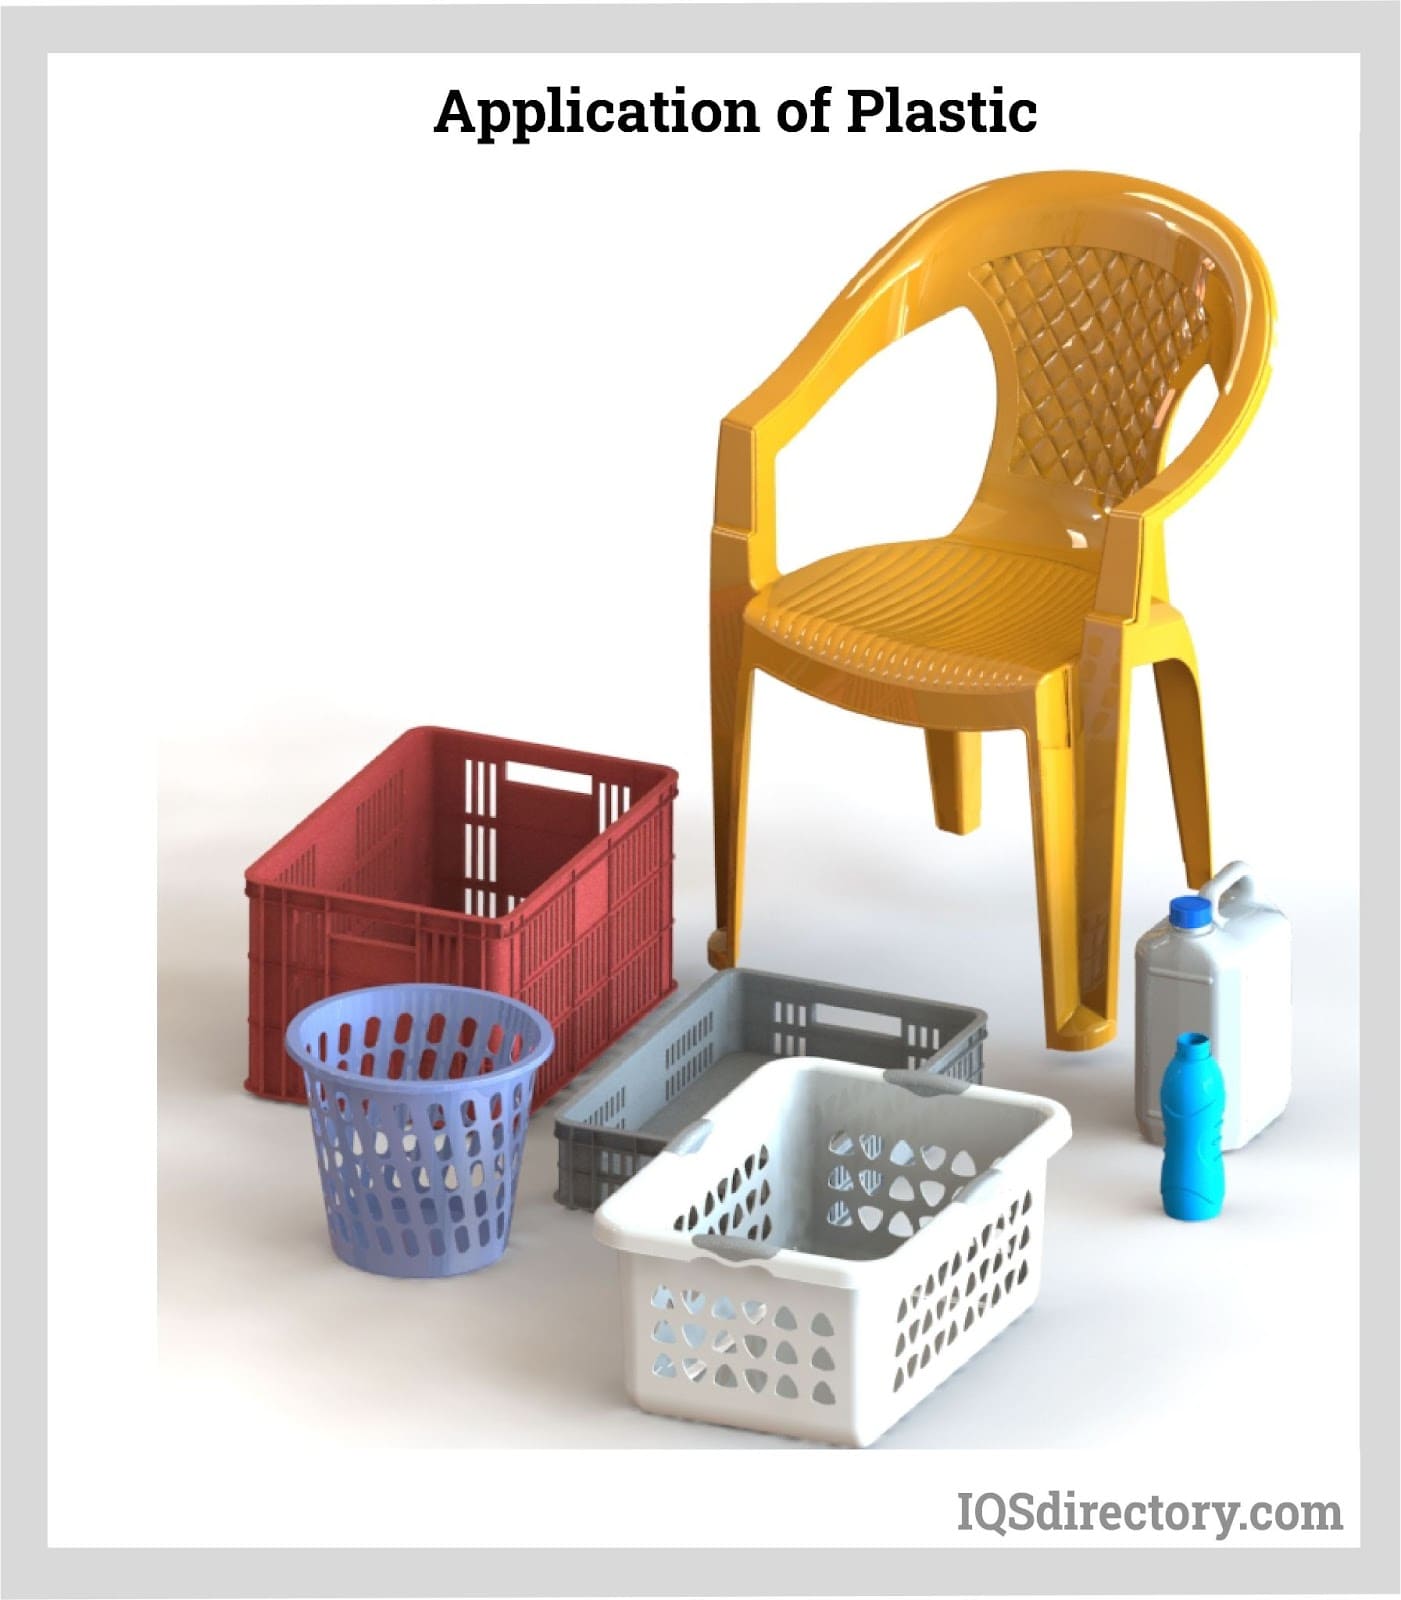 Application of Plastic